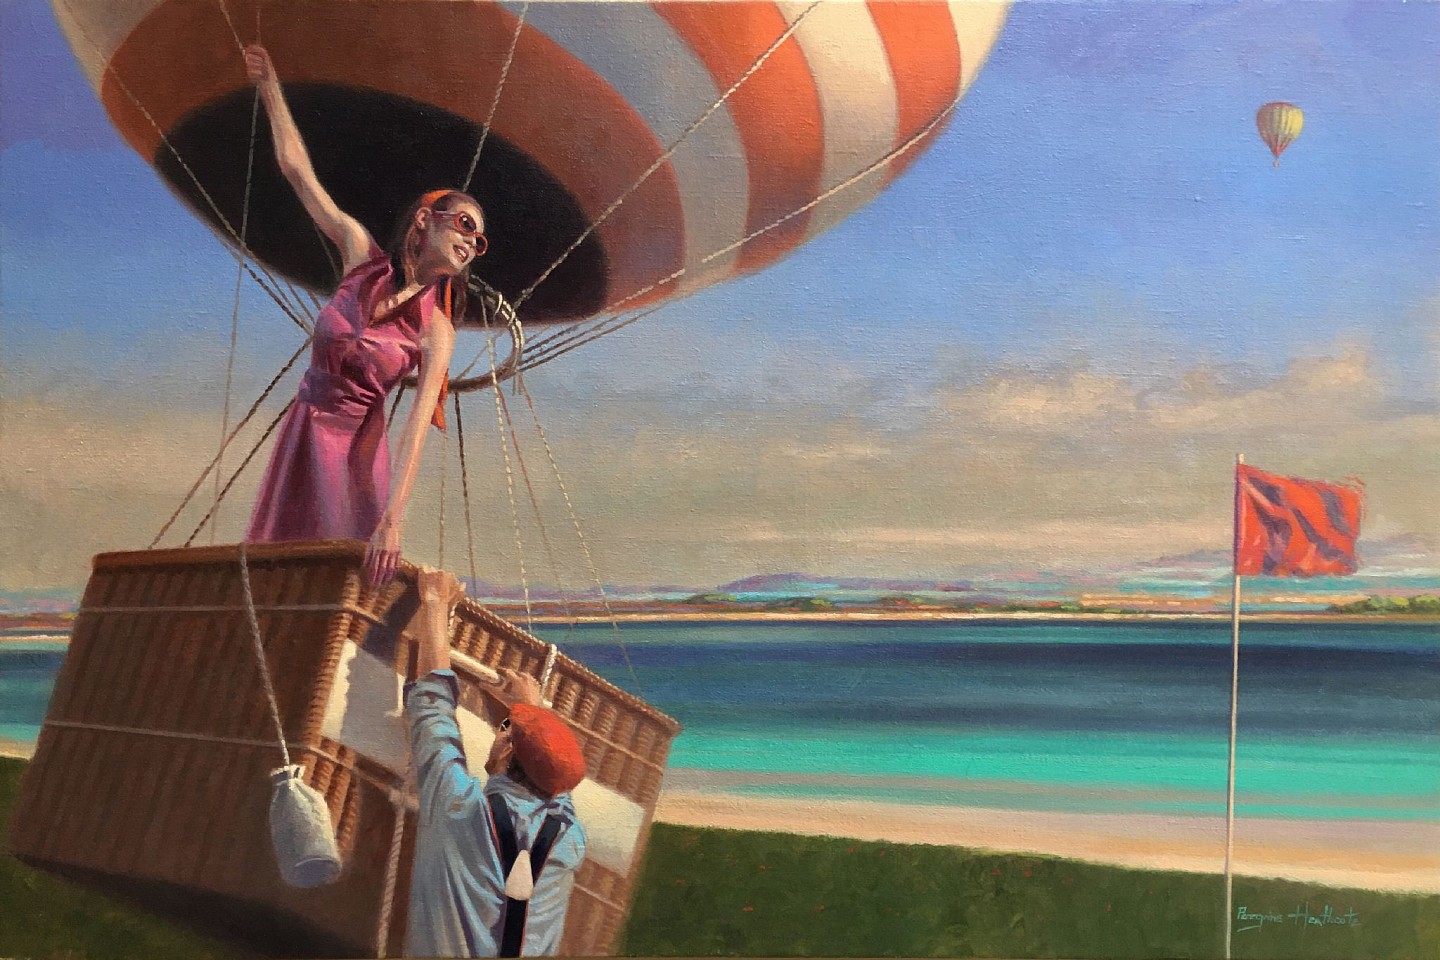 Peregrine Heathcote, Balloon Racing, 2022
oil on canvas, 20 x 30 in. (50.8 x 76.2 cm)
PH221001